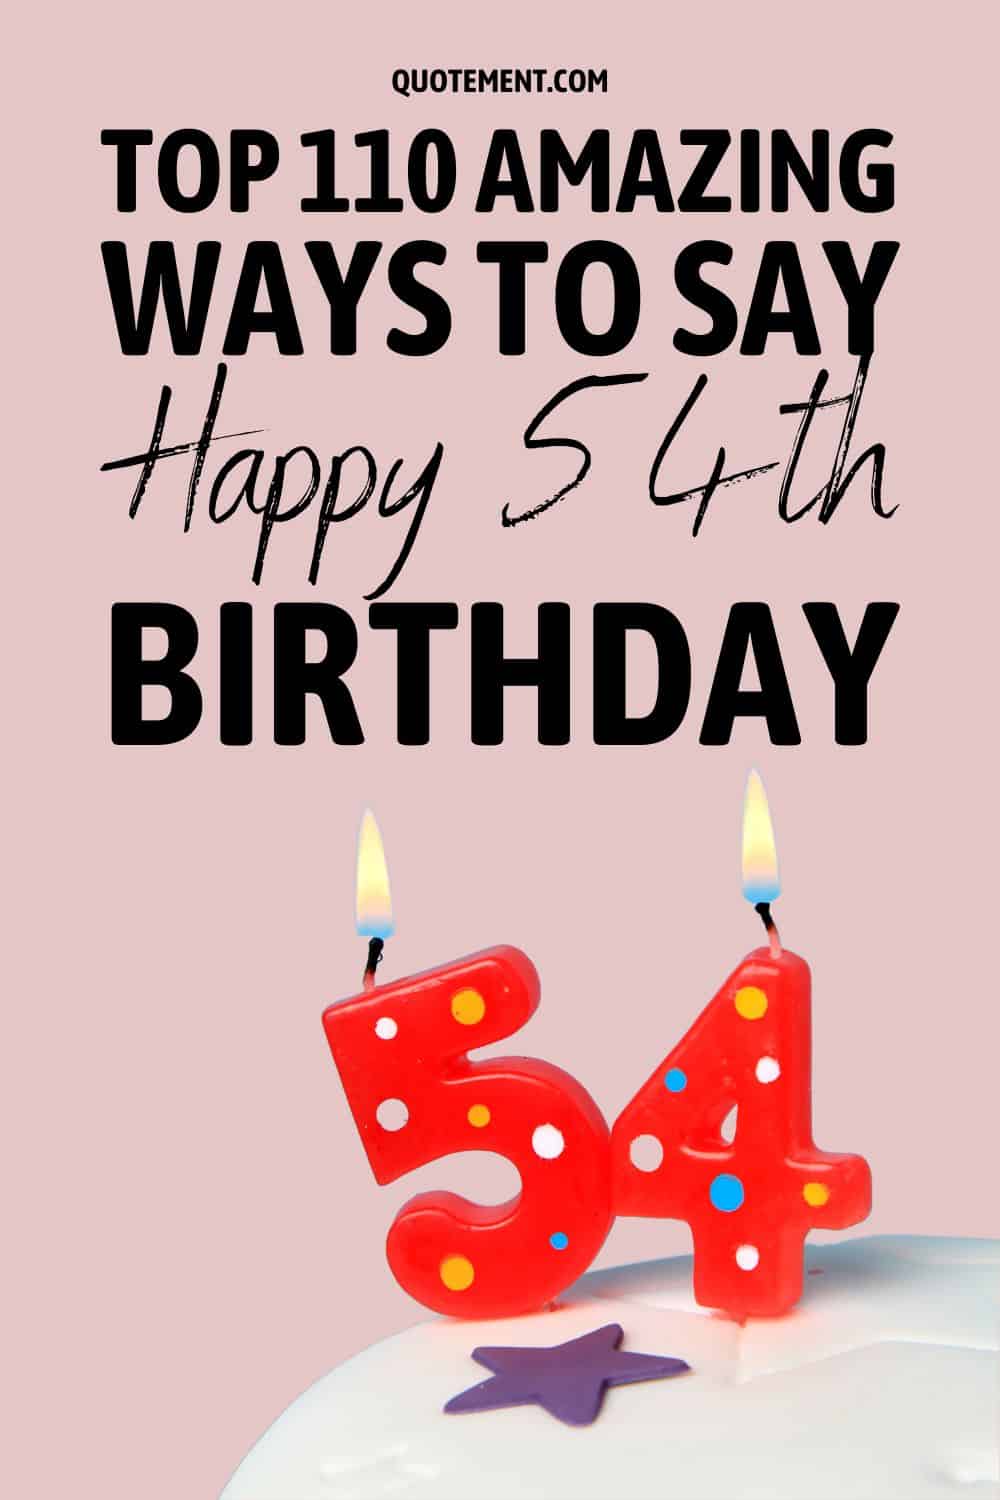 Top 110 Amazing Ways To Say Happy 54th Birthday
